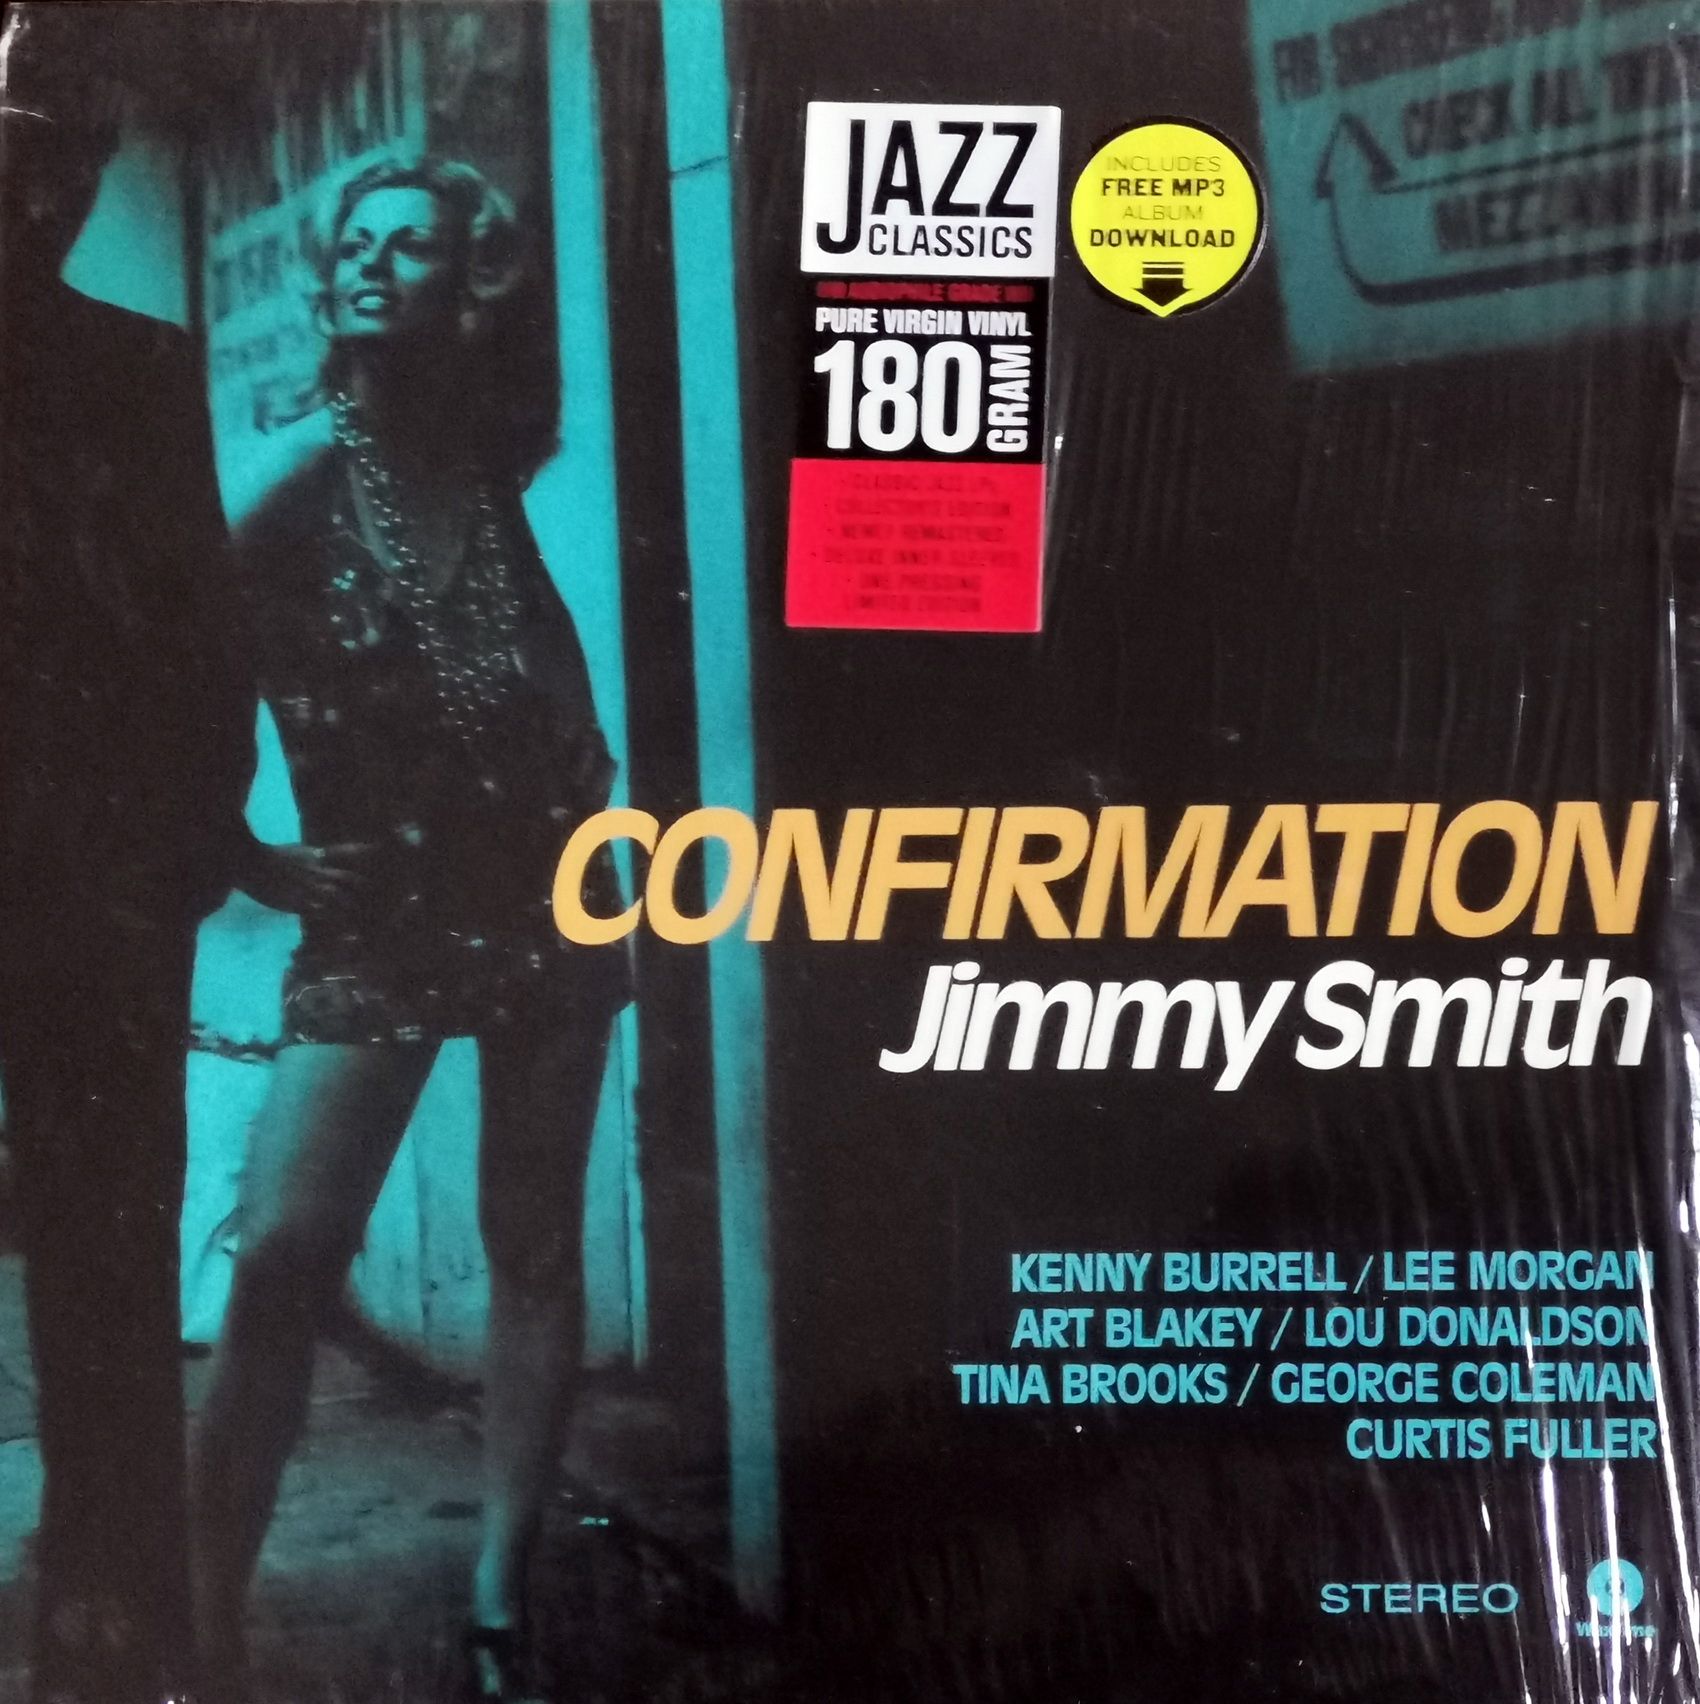 S/S vinyl - Conformation Jimmy Smith. 180gr